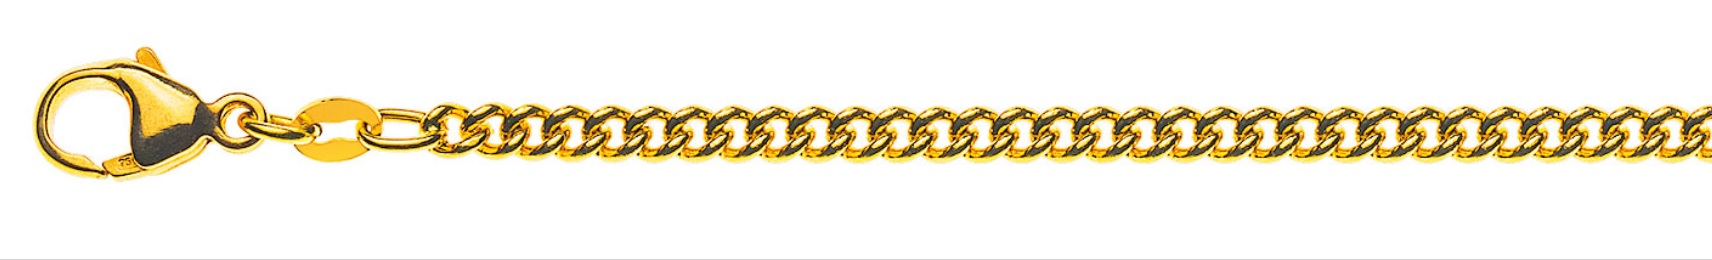 AURONOS Prestige Necklace yellow gold 18K round curb chain 50cm 2.8mm